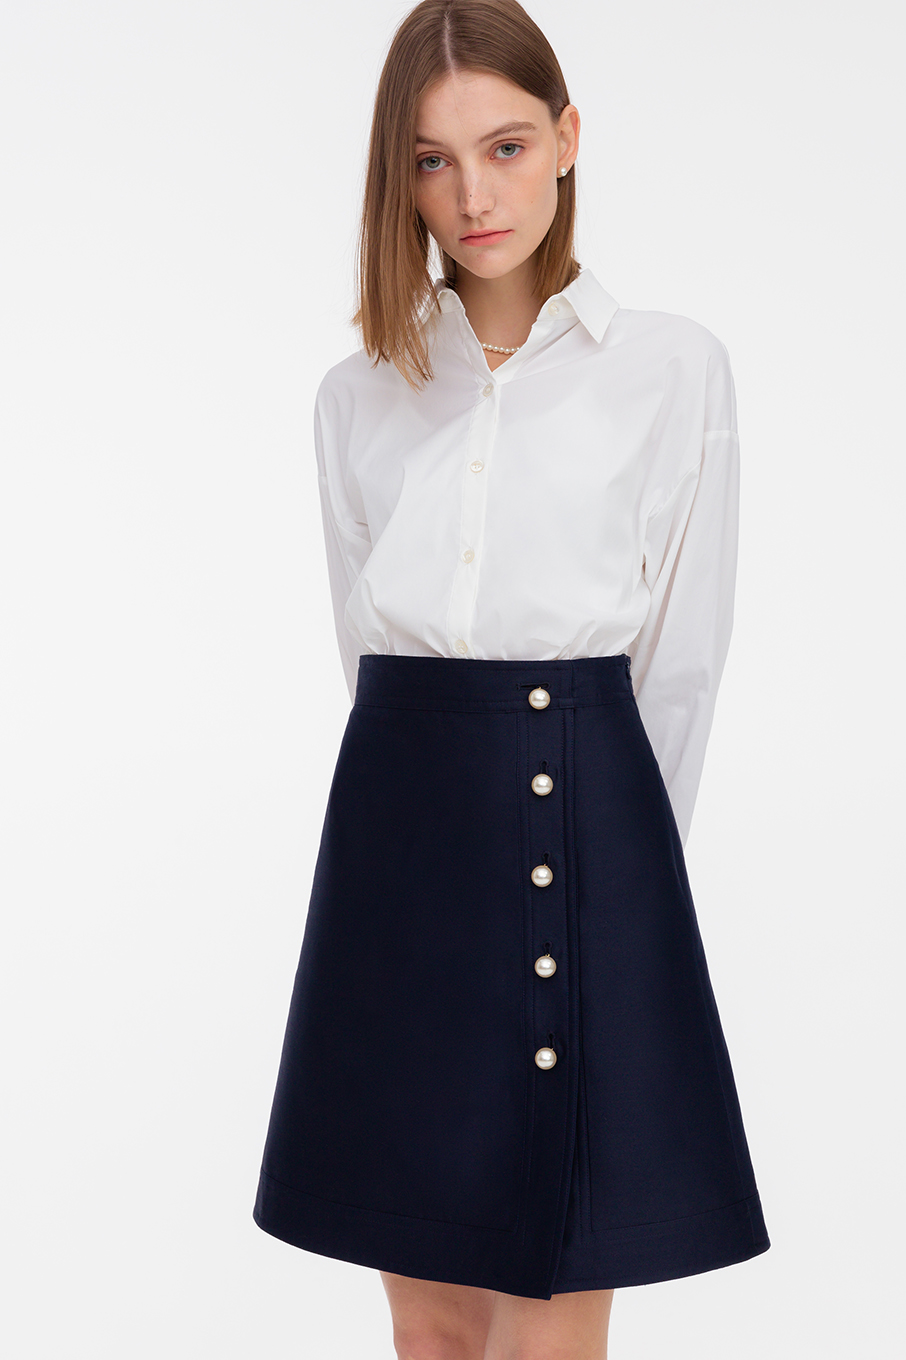 Kira skirt (Navy) 2차 판매 완료 3차 리오더